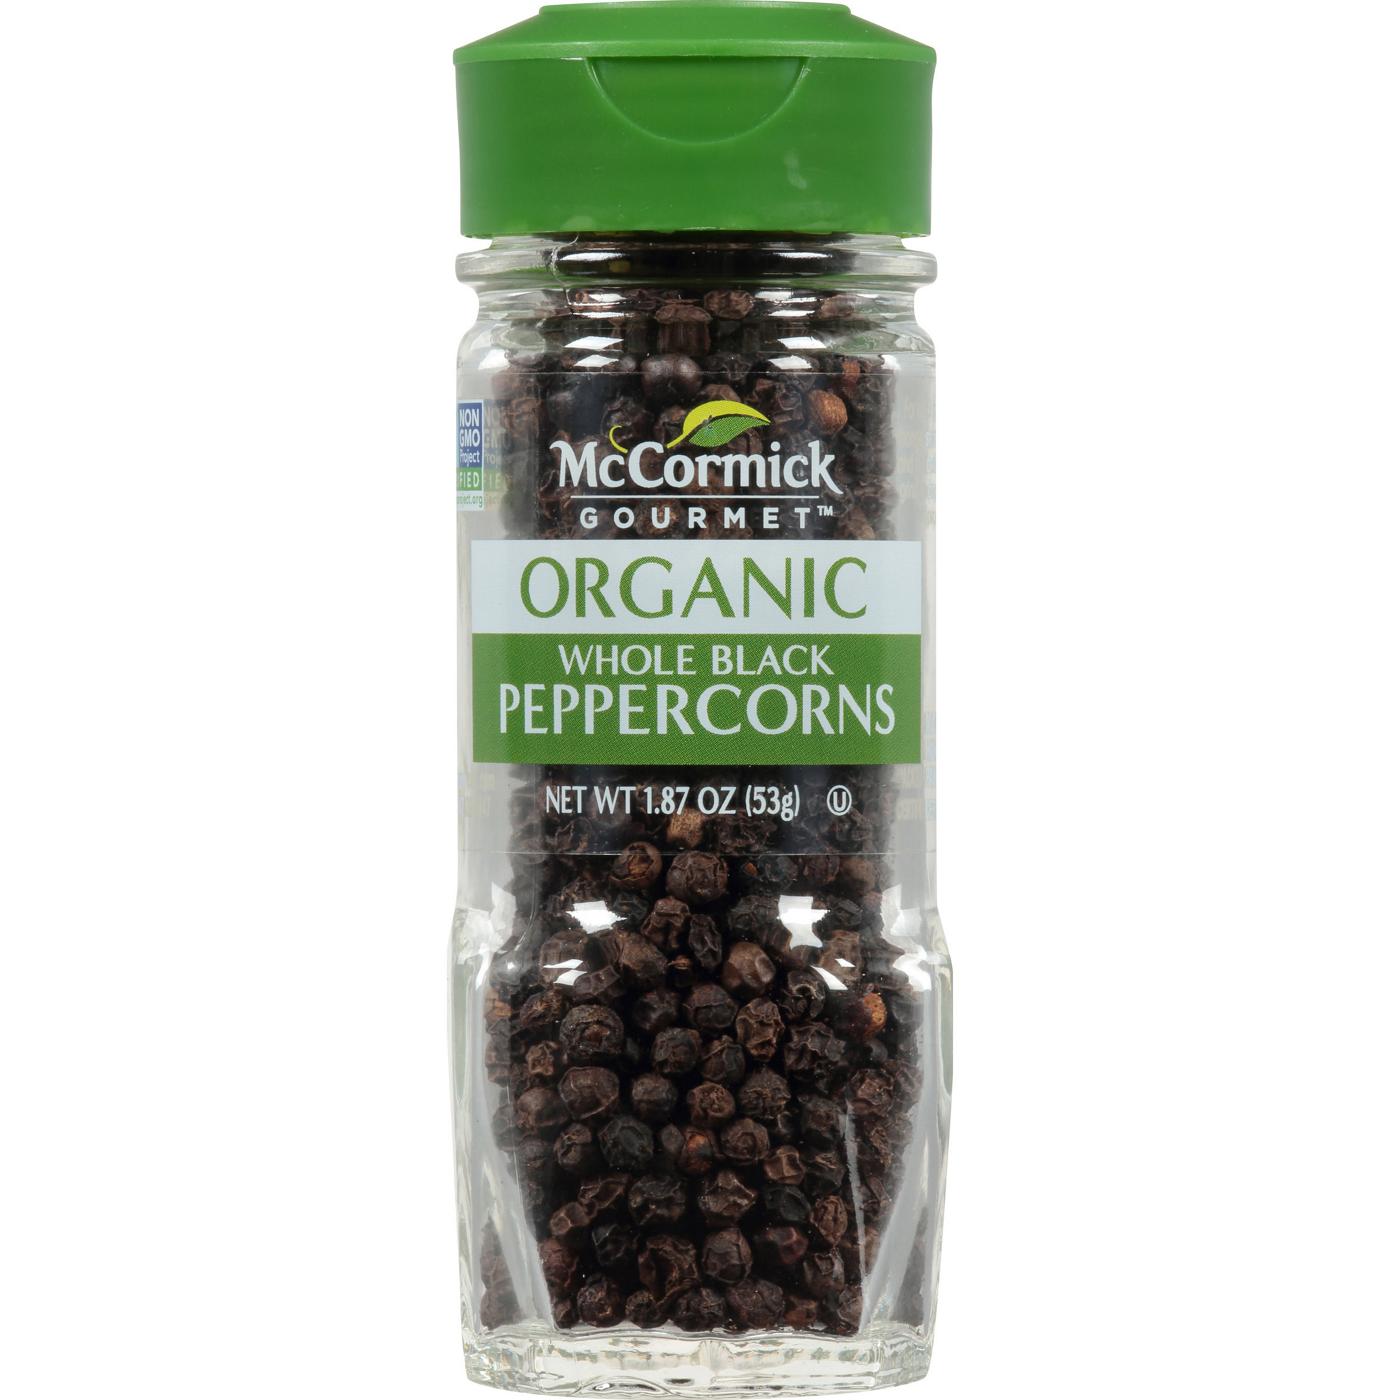 McCormick Gourmet Organic Whole Black Peppercorns; image 1 of 4